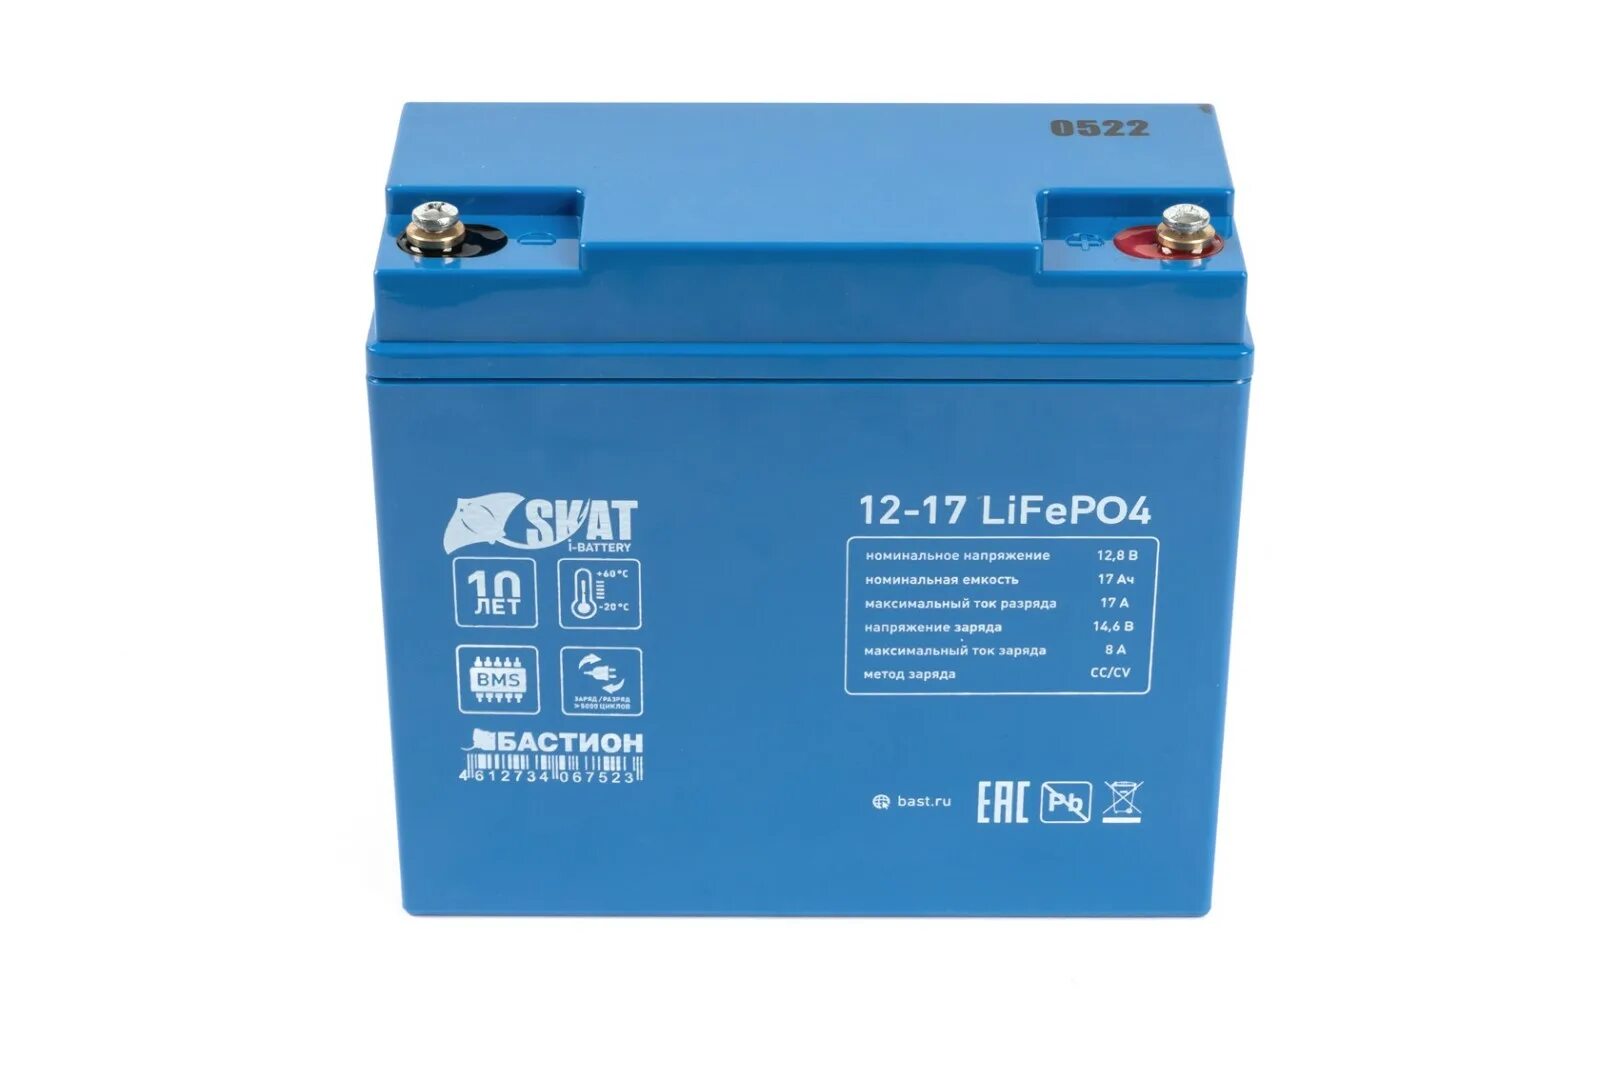 Skat i-Battery 12-17 lifepo4. АКБ Skat i-Battery 12-7 lifepo4. Skat i-Battery 12-17 lifepo4 габариты. Аккумуляторная батарея "12-сам-23".